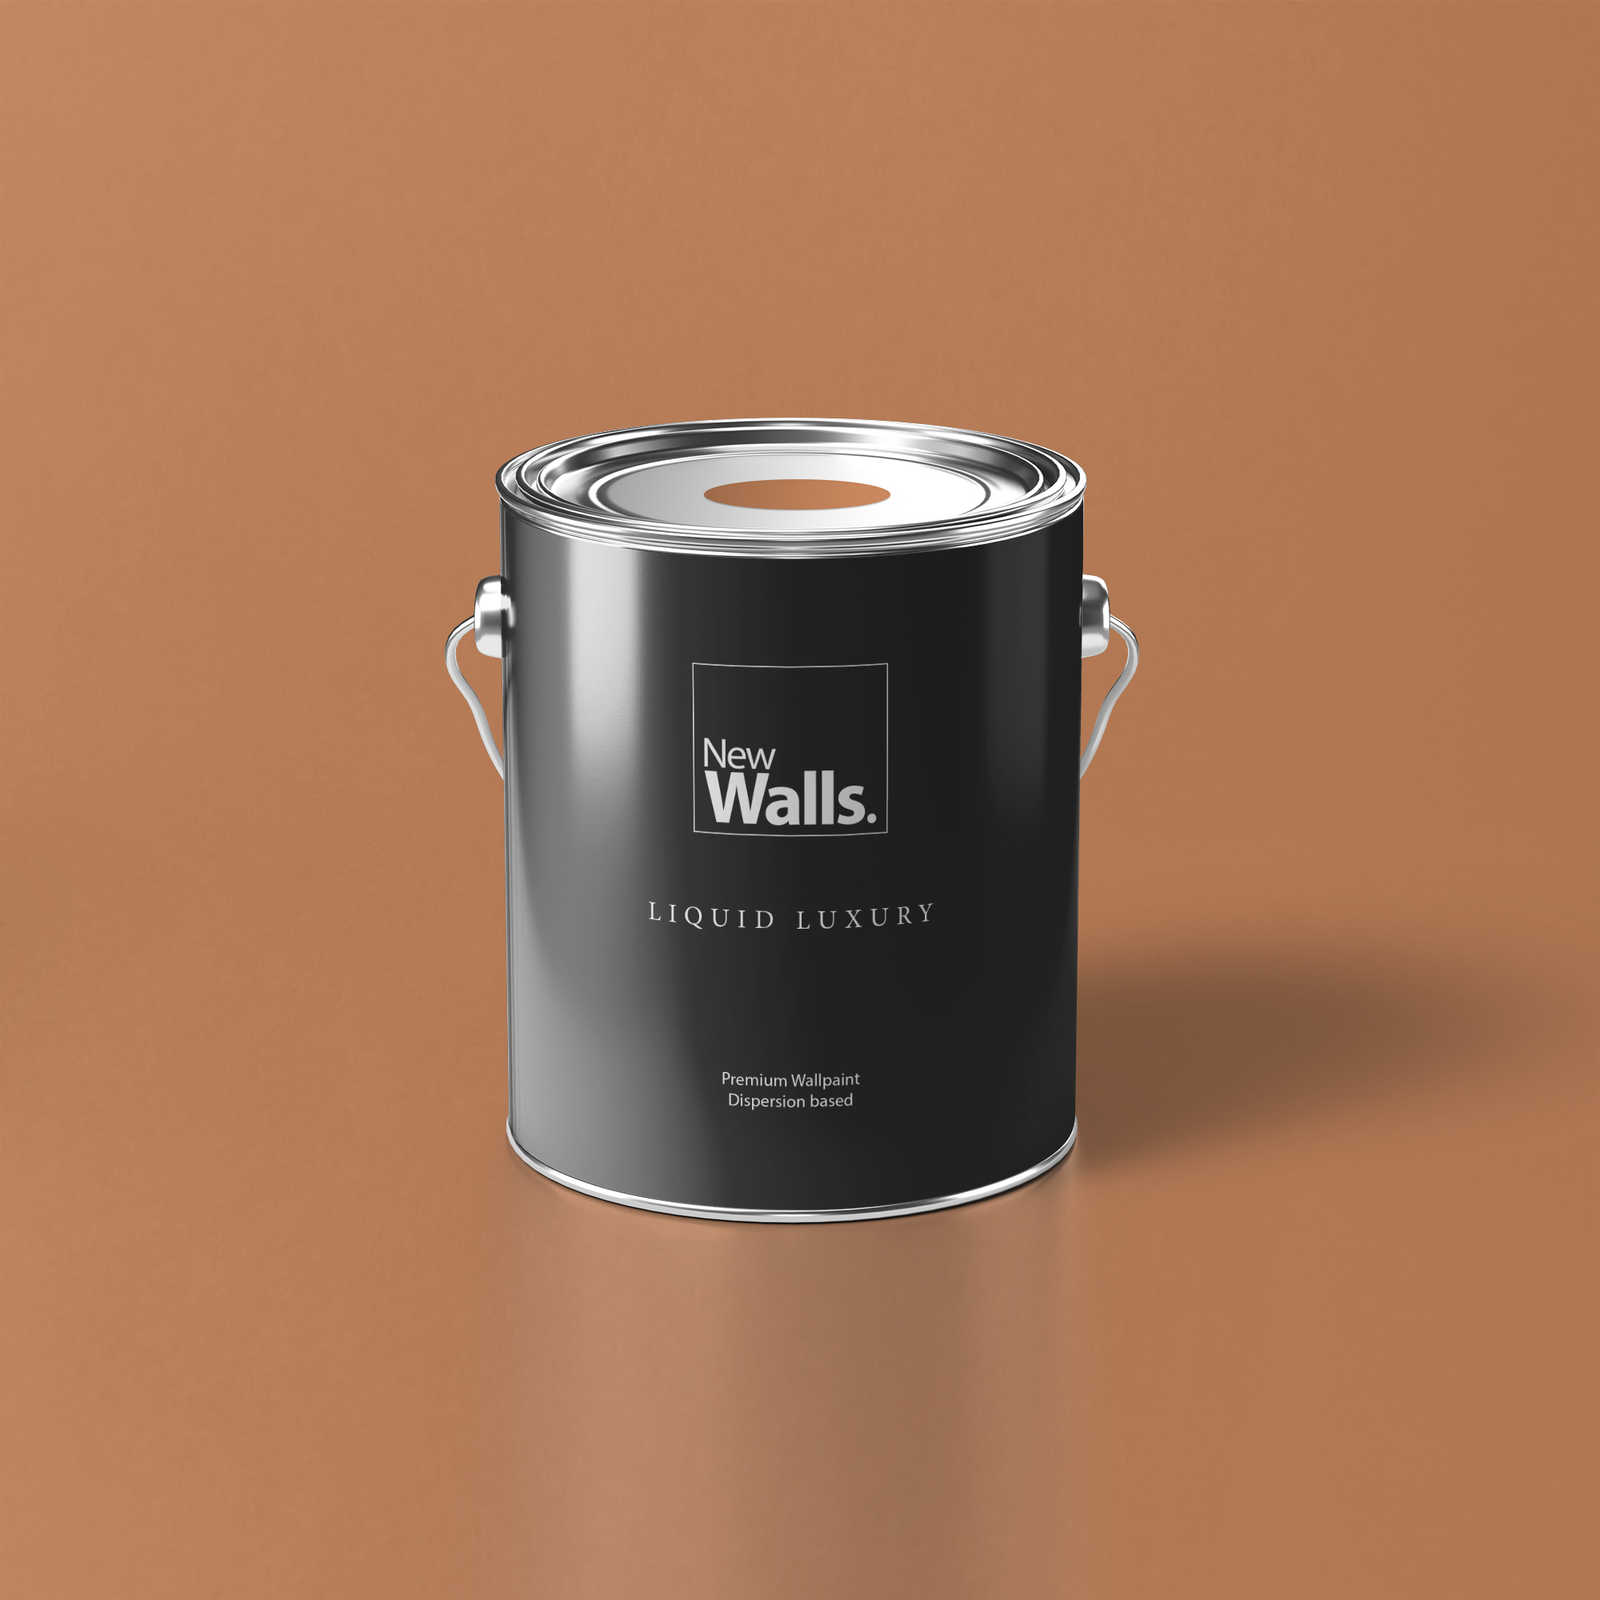 Premium Wall Paint serene copper »Pretty Peach« NW904 – 5 litre
